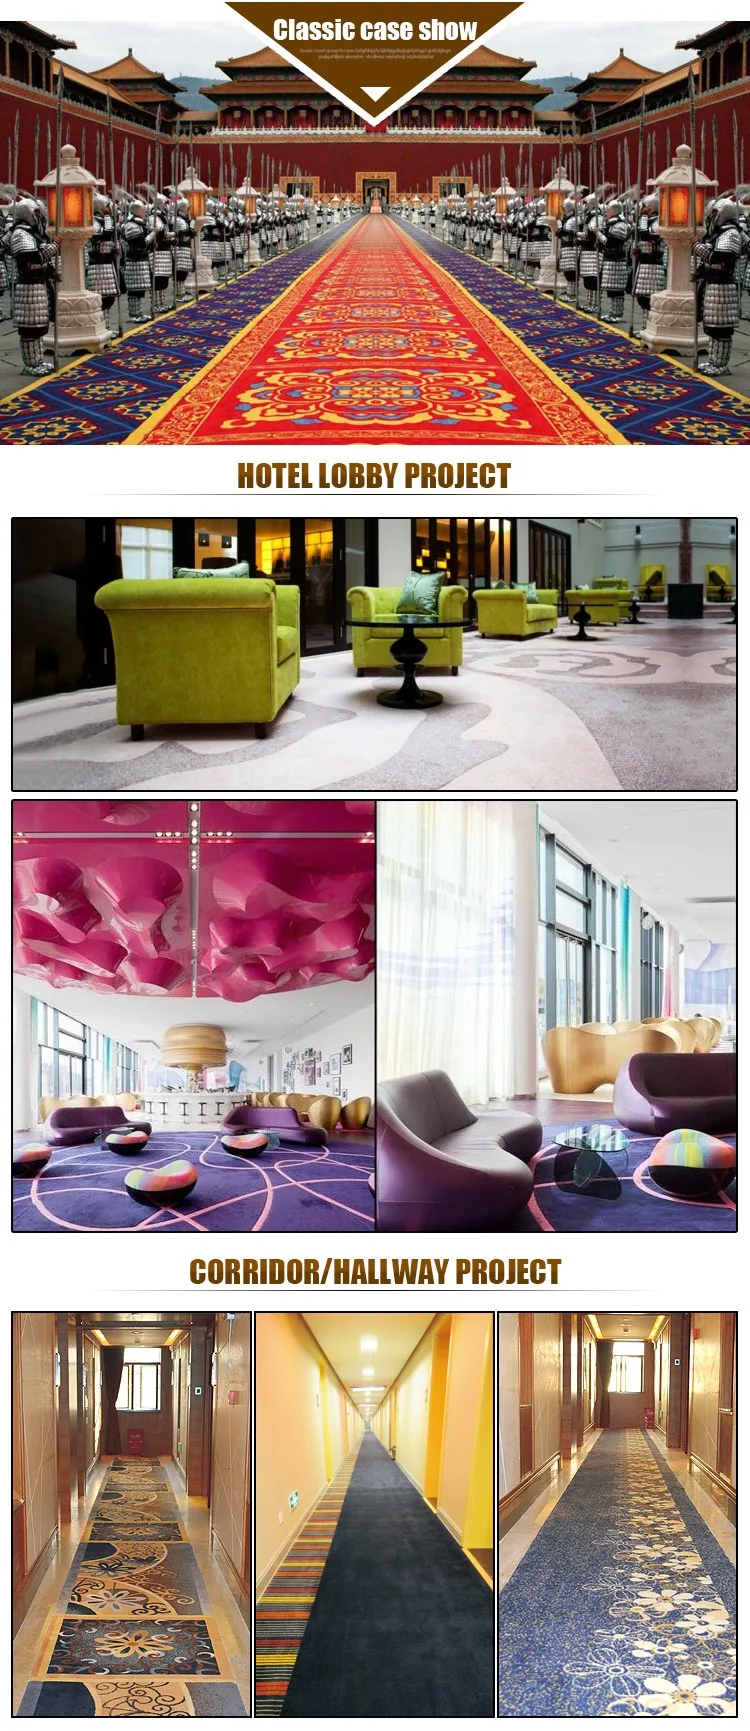 Custom Design Luxury Wall To Wall Axminster Wool Carpet Hotel Banquet Hall Carpet